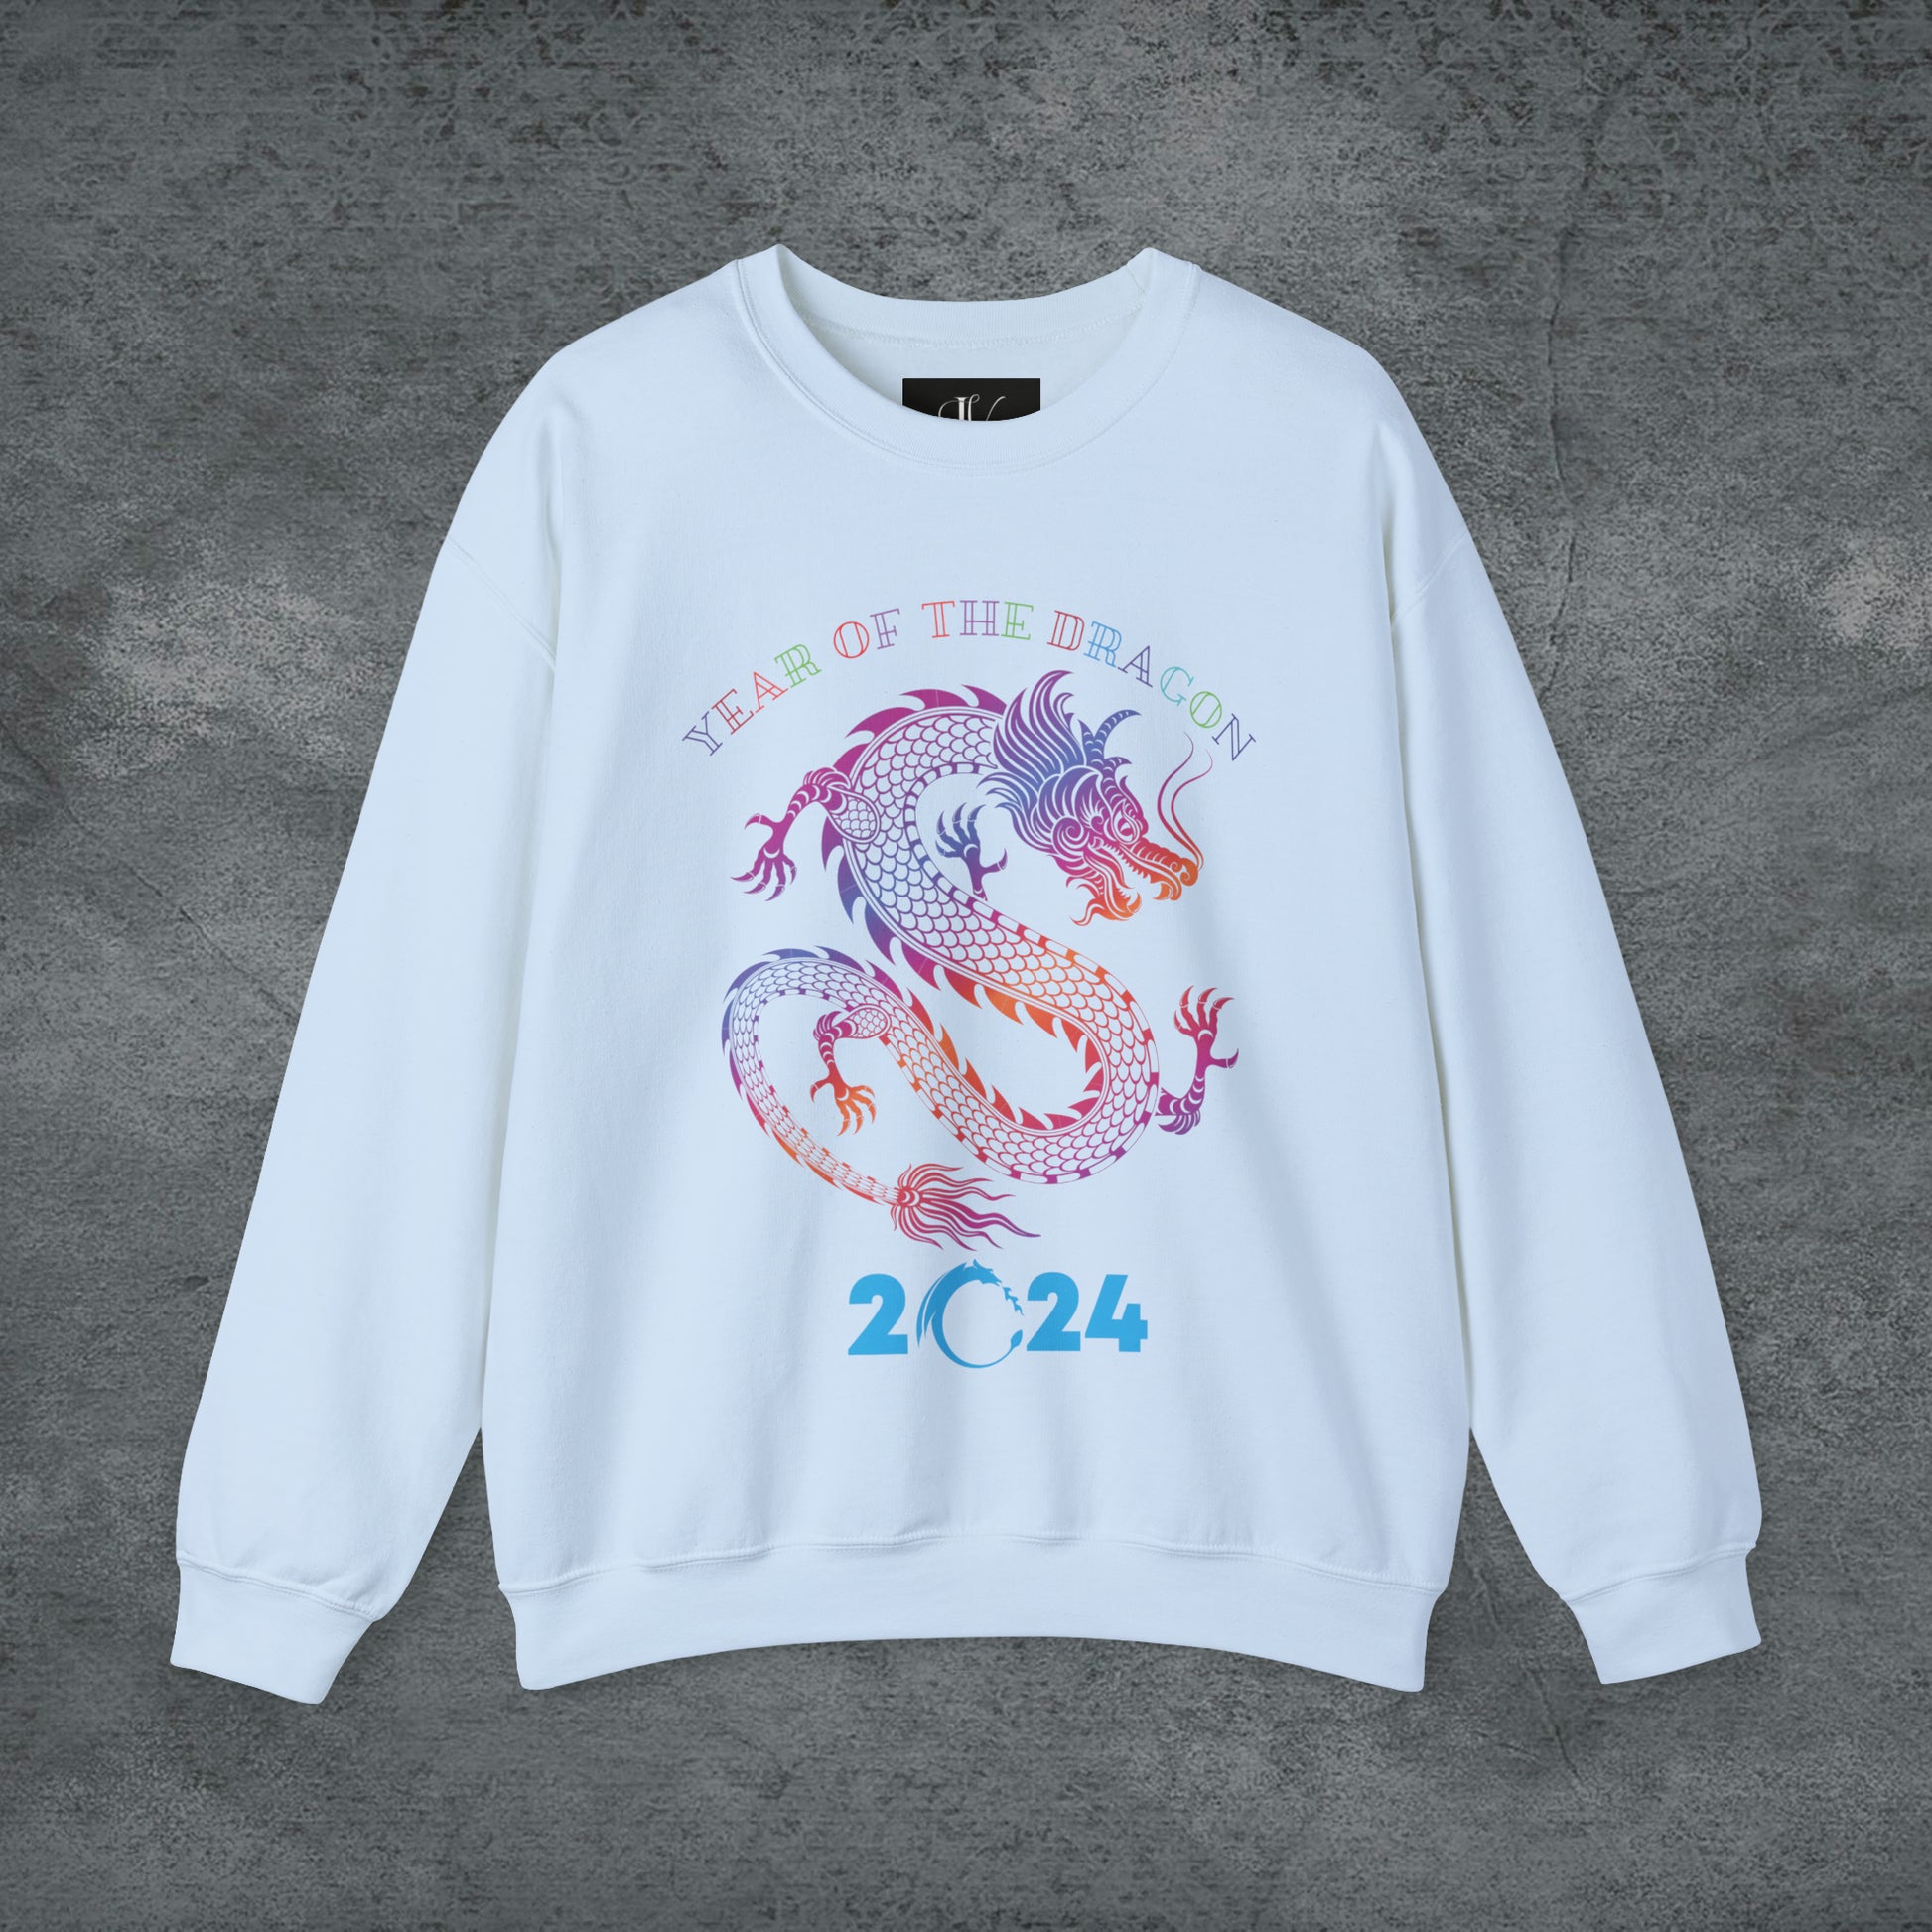 Year of the Dragon Sweatshirt - 2024 Chinese Zodiac Shirt for Lunar New Year Celebrations Sweatshirt S Light Blue 